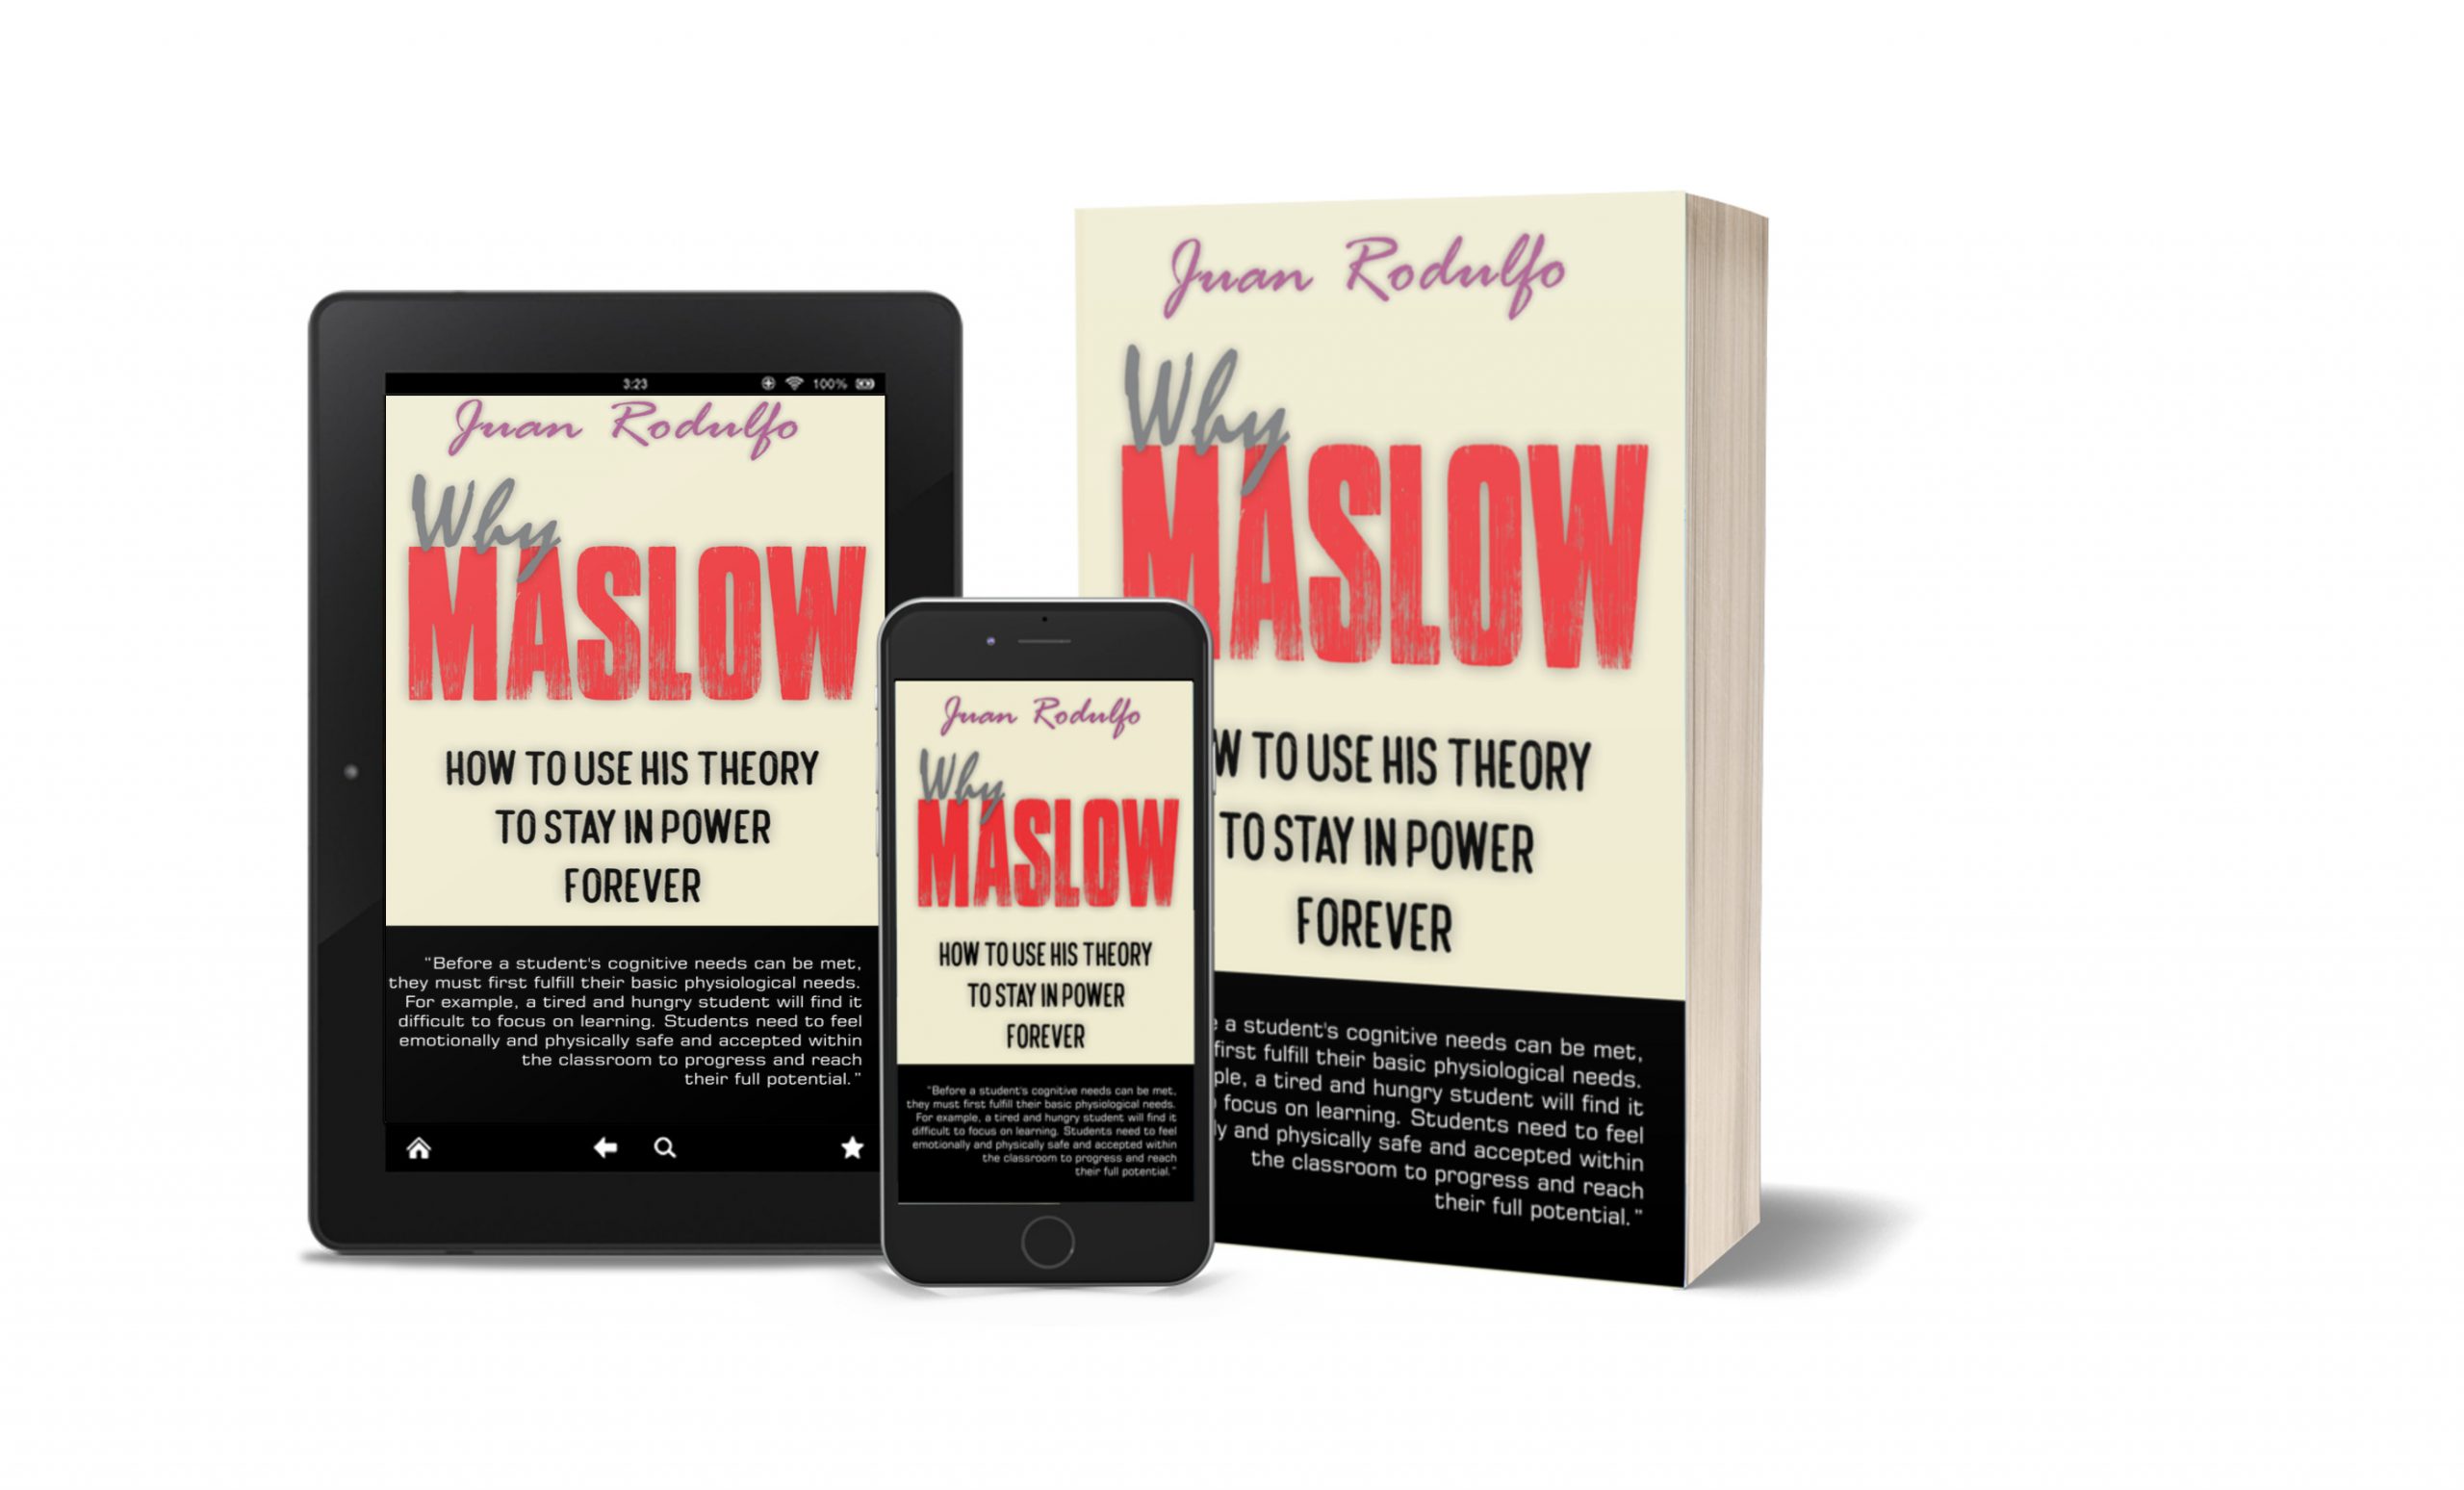 Why Maslow by Juan Rodulfo